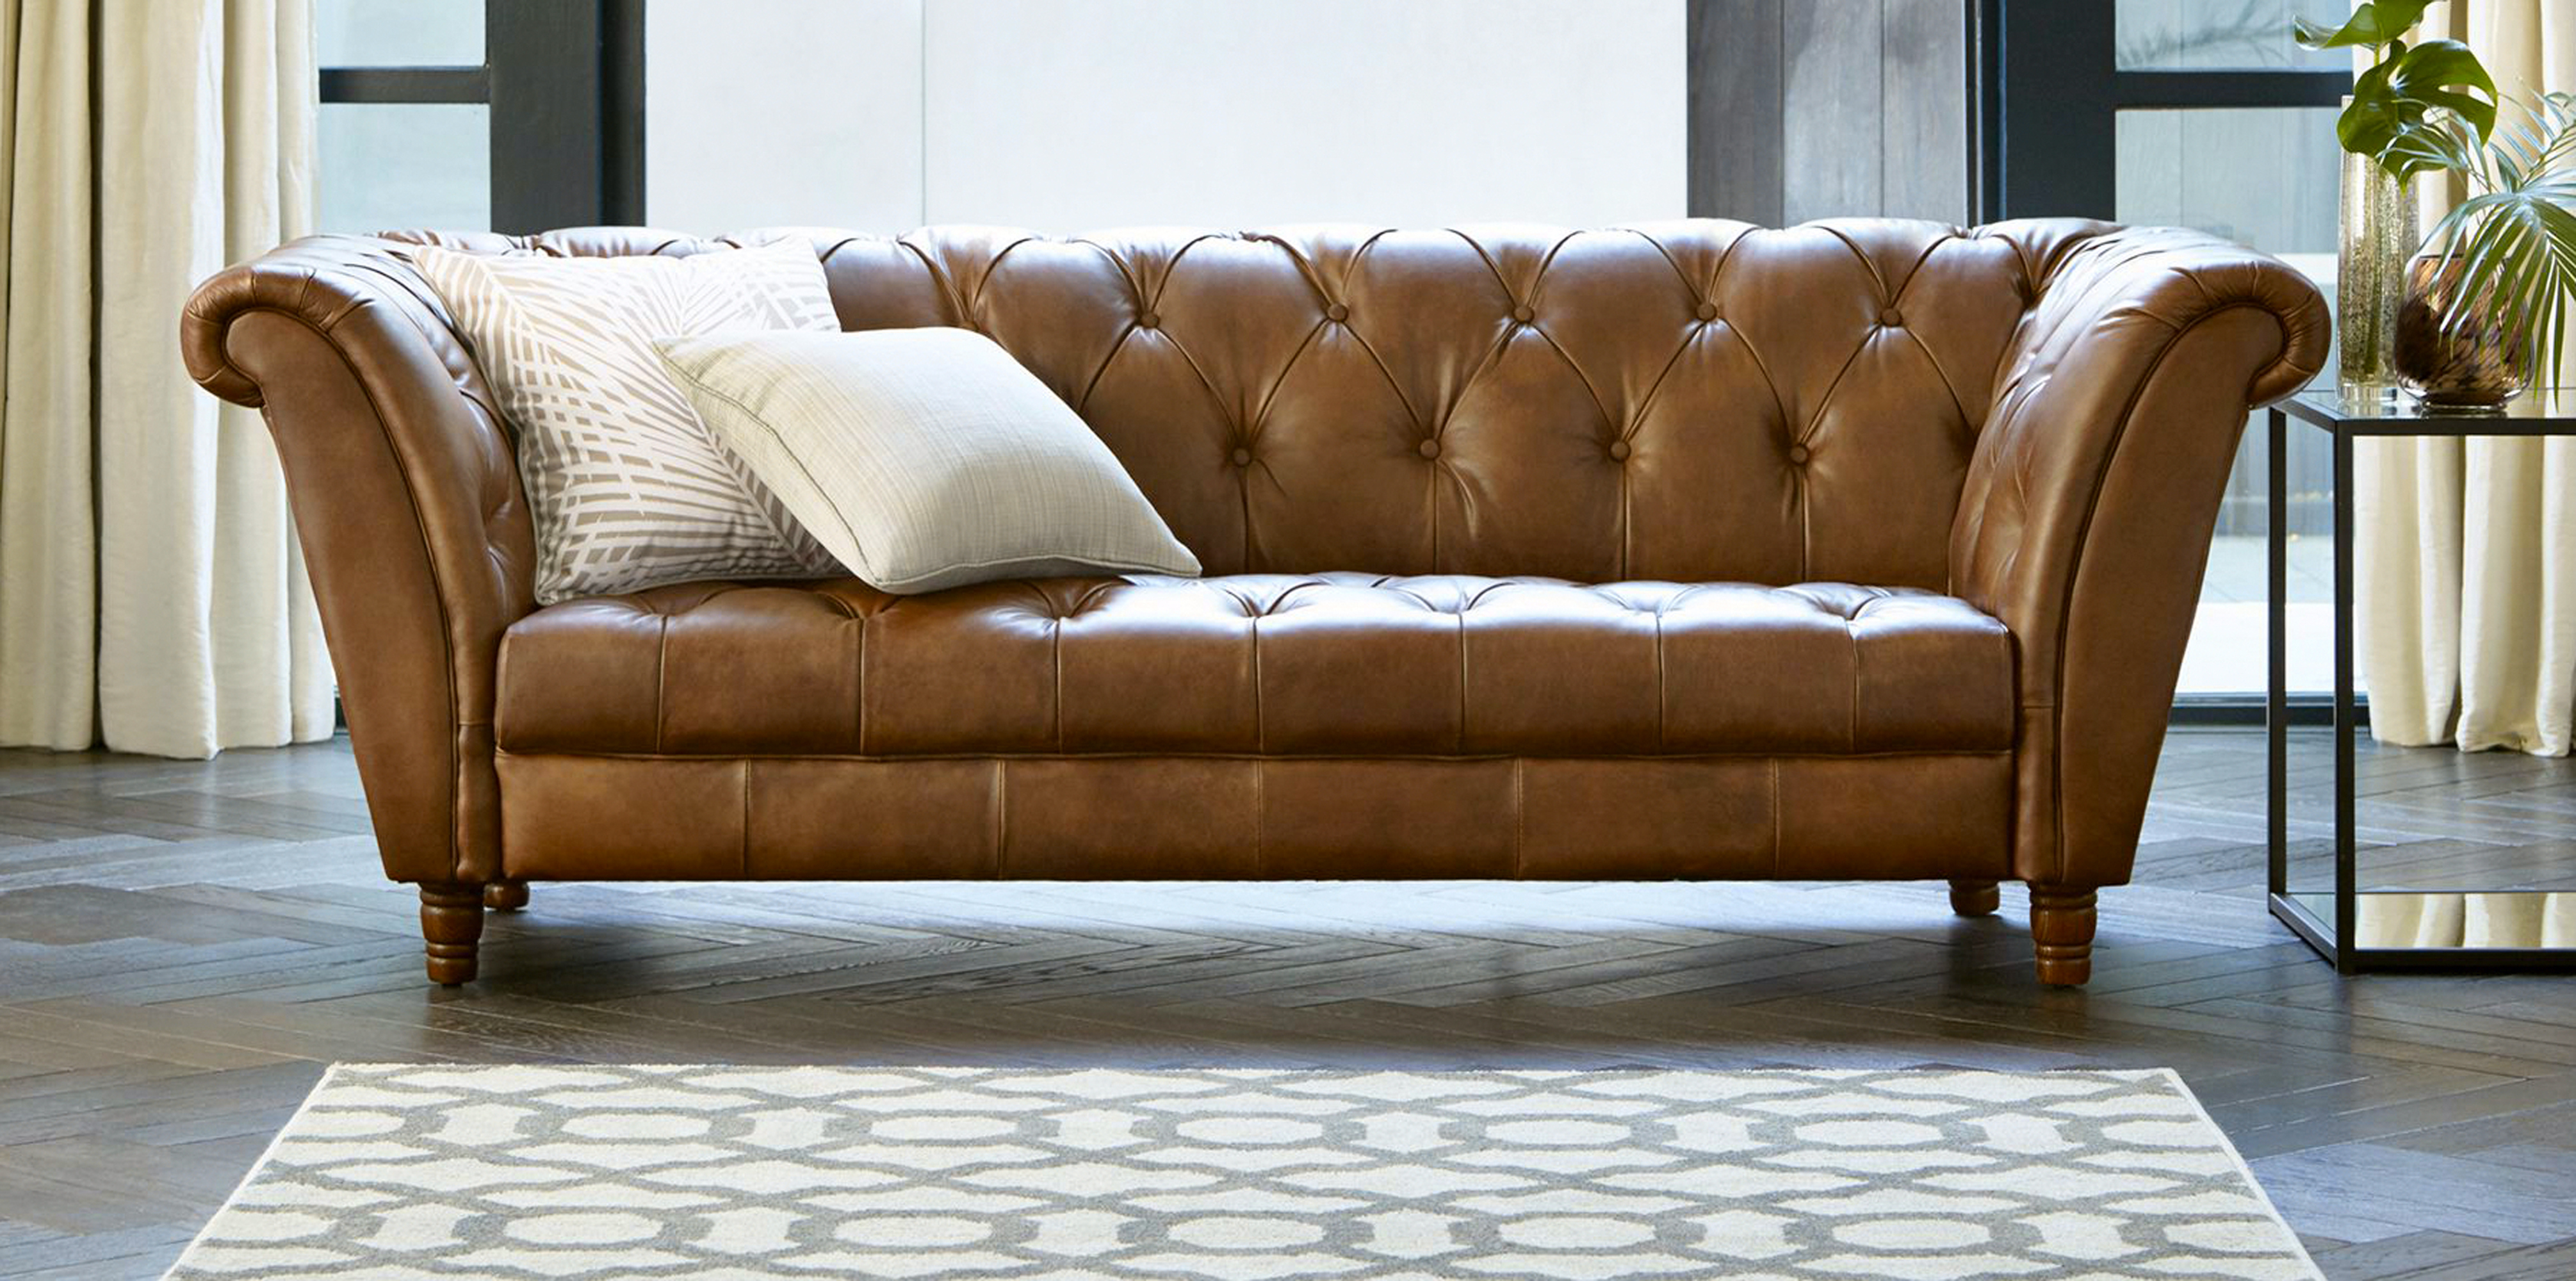 leather sofa sydney australia